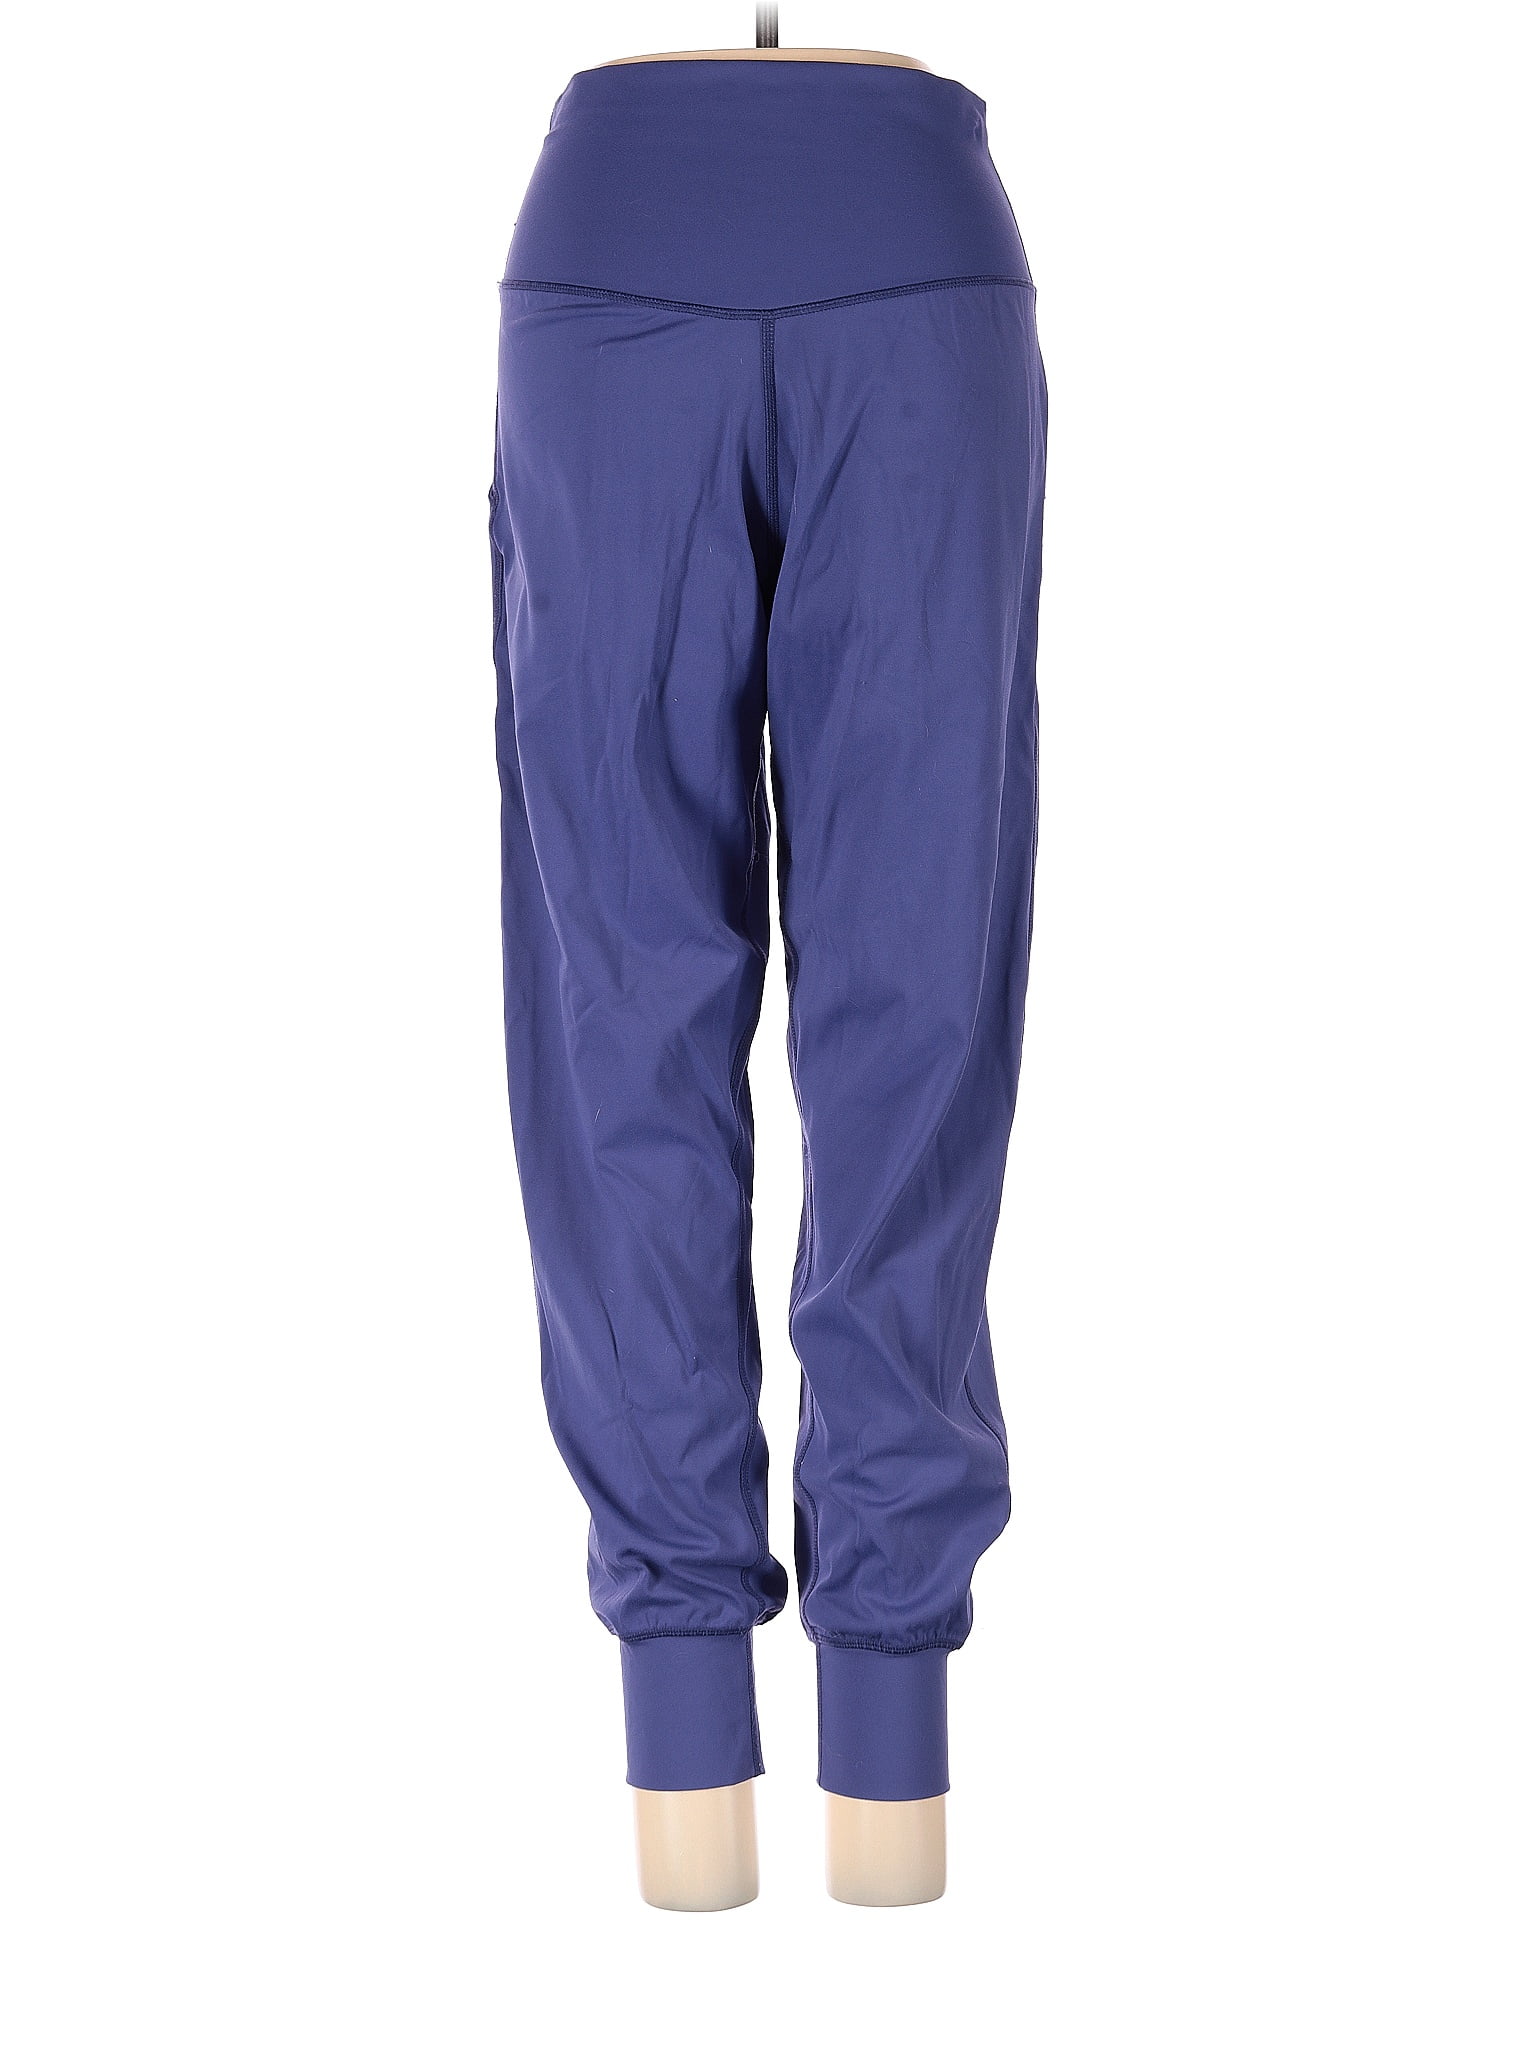 colorfulkoala Solid Blue Active Pants Size XS - 58% off